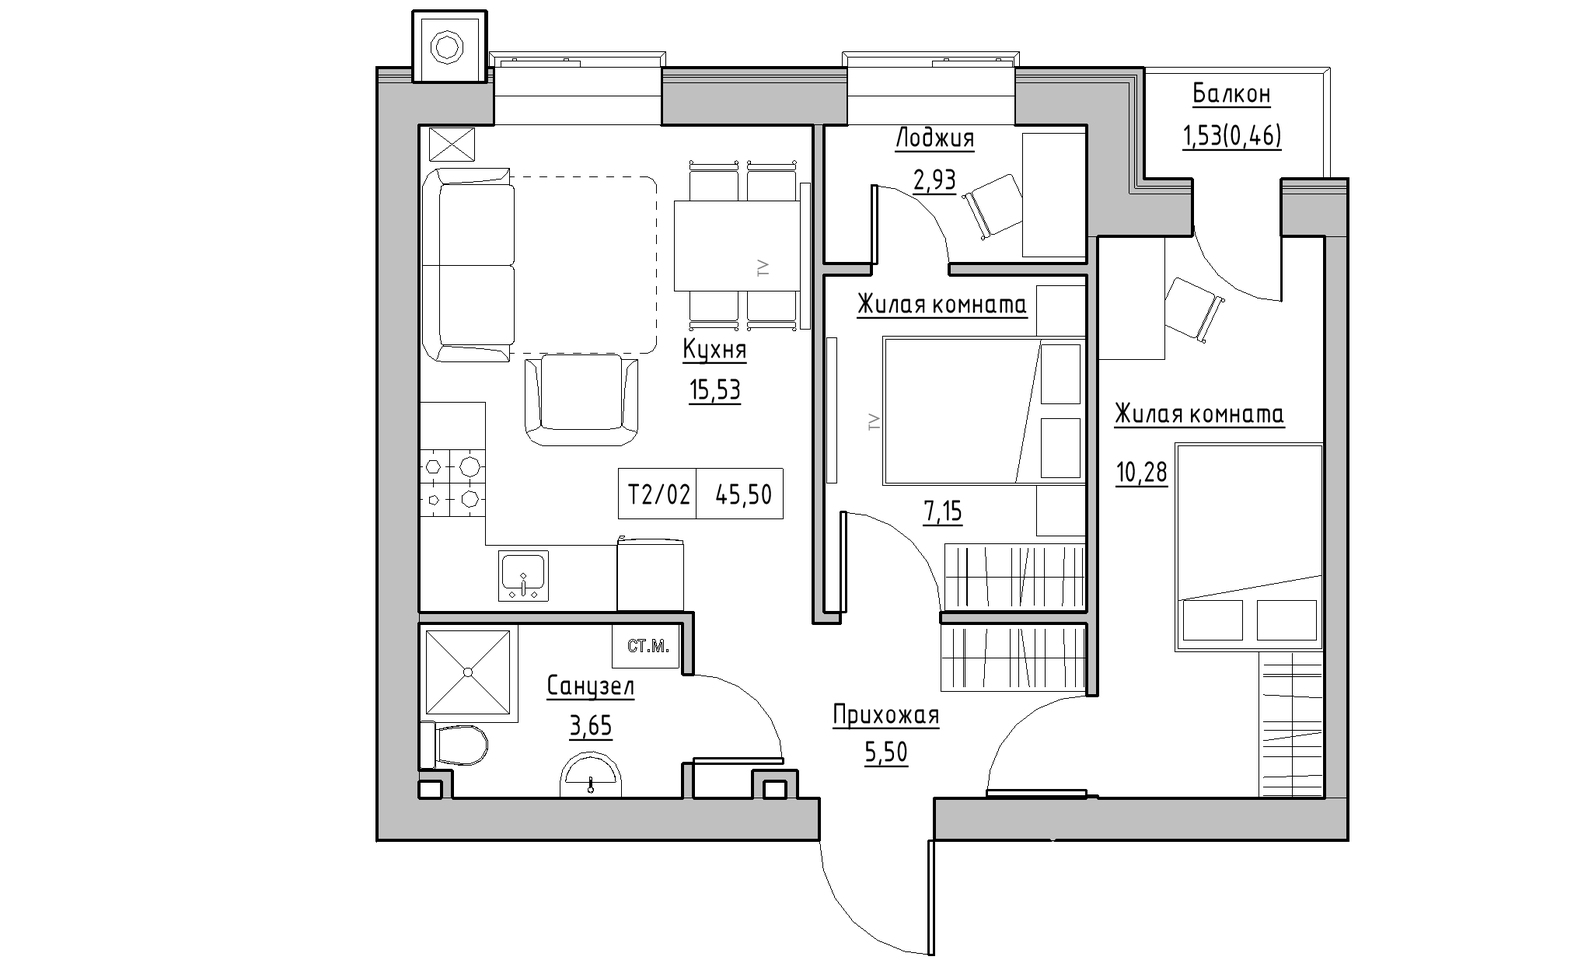 Planning 2-rm flats area 45.5m2, KS-014-04/0008.